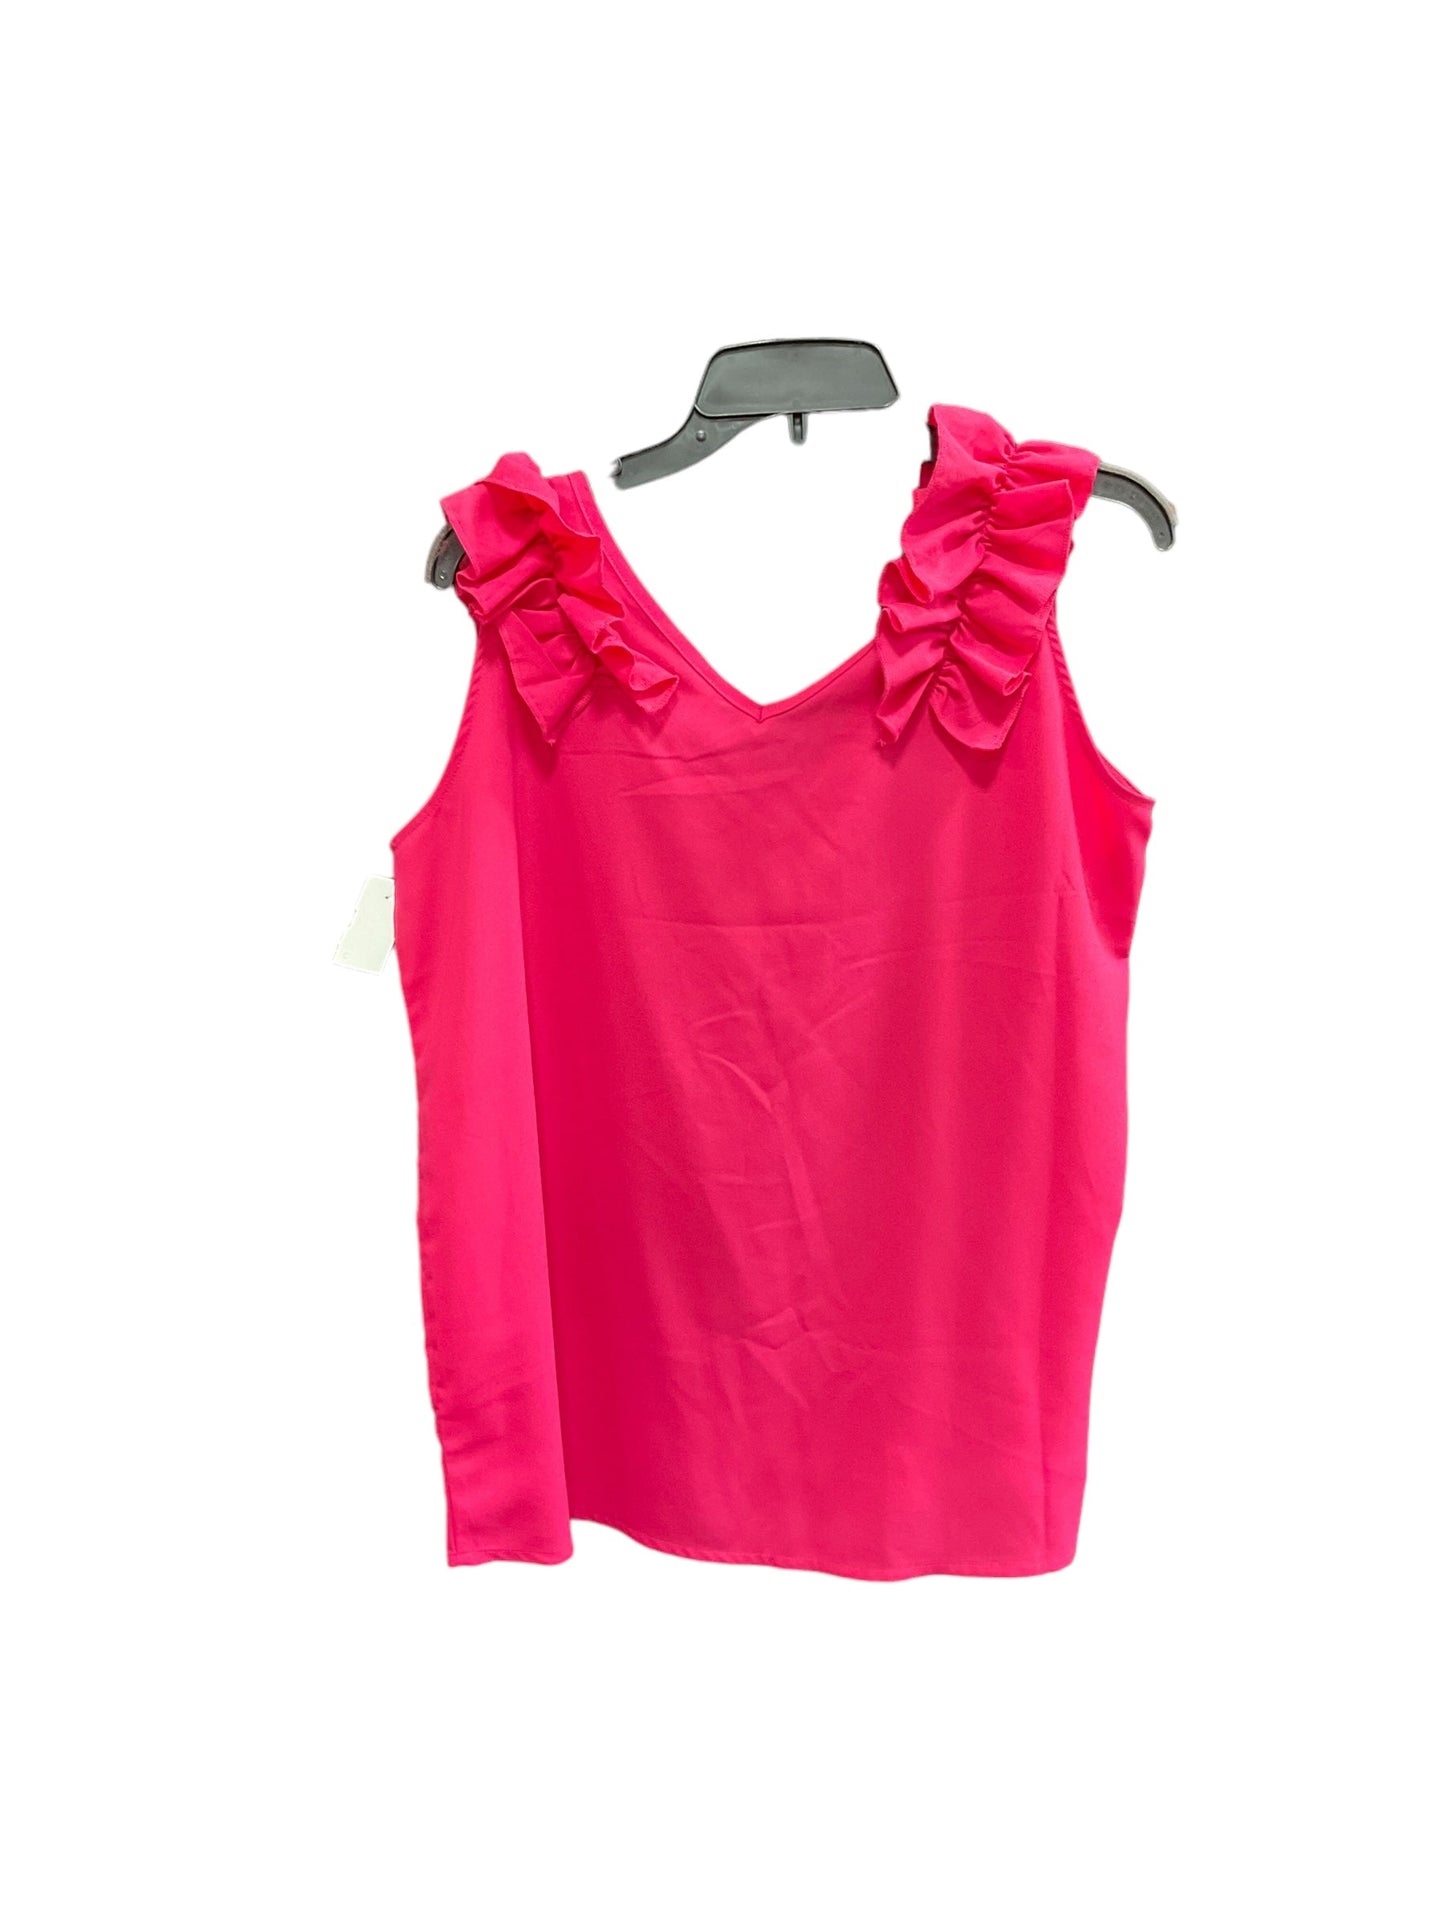 Pink Top Sleeveless Zenana Outfitters, Size Xl